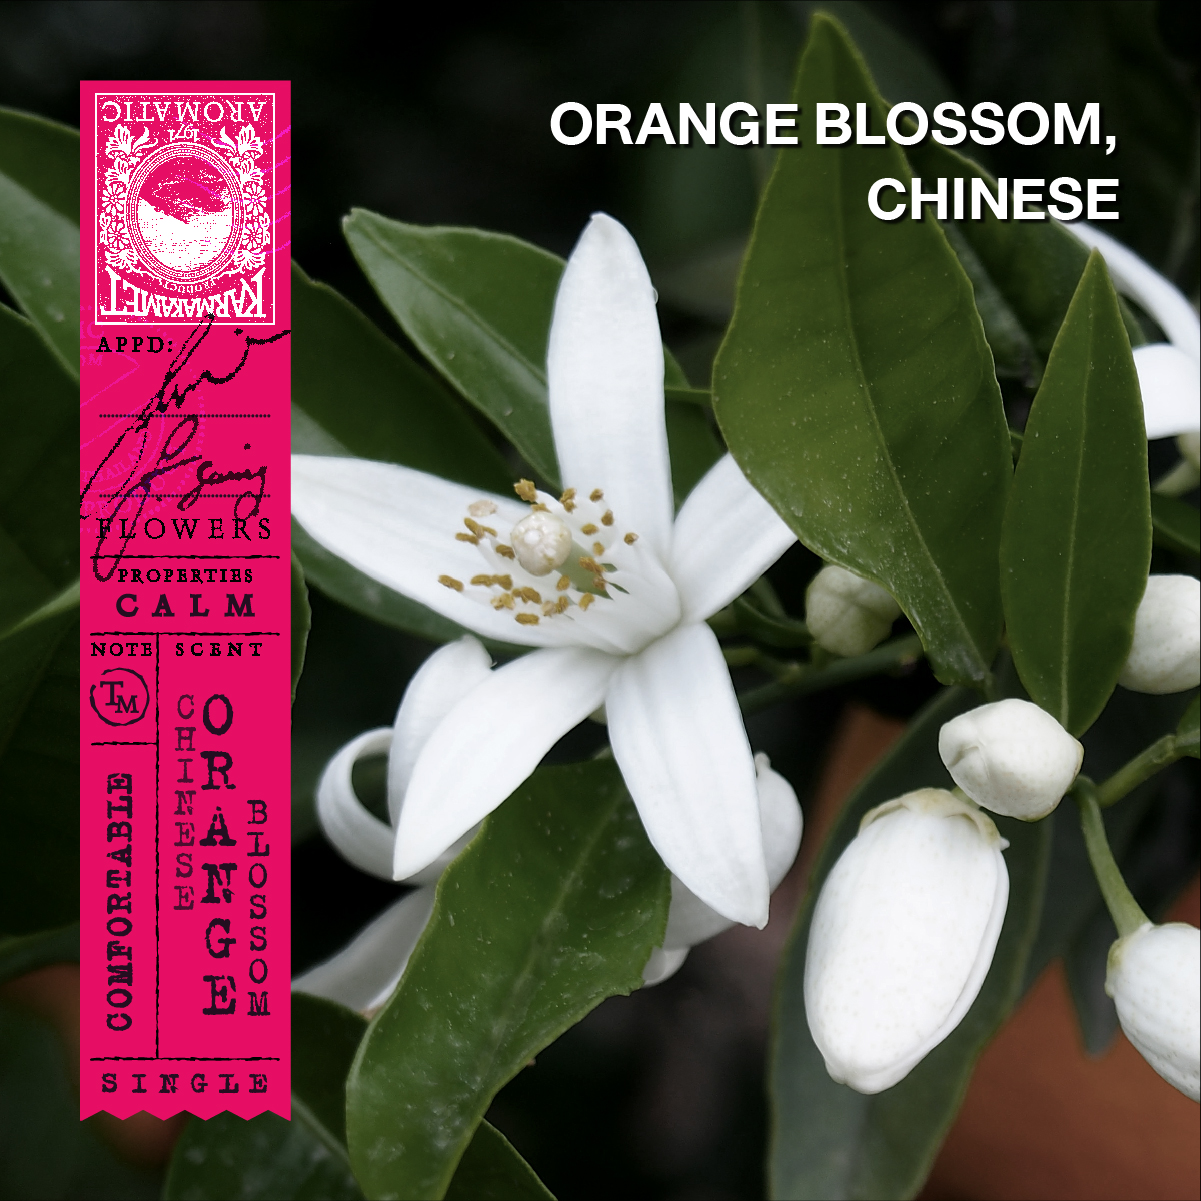 KARMAKAMET Original Room Perfume Diffuser / Single คามาคาเมต ก้านไม้หอมกระจายกลิ่น น้ำหอมบ้าน ก้านไม้หอม น้ำหอมปรับอากาศ บ้านหอม  กลิ่น Chinese Orange Blossomปริมาณ (มล.) 200